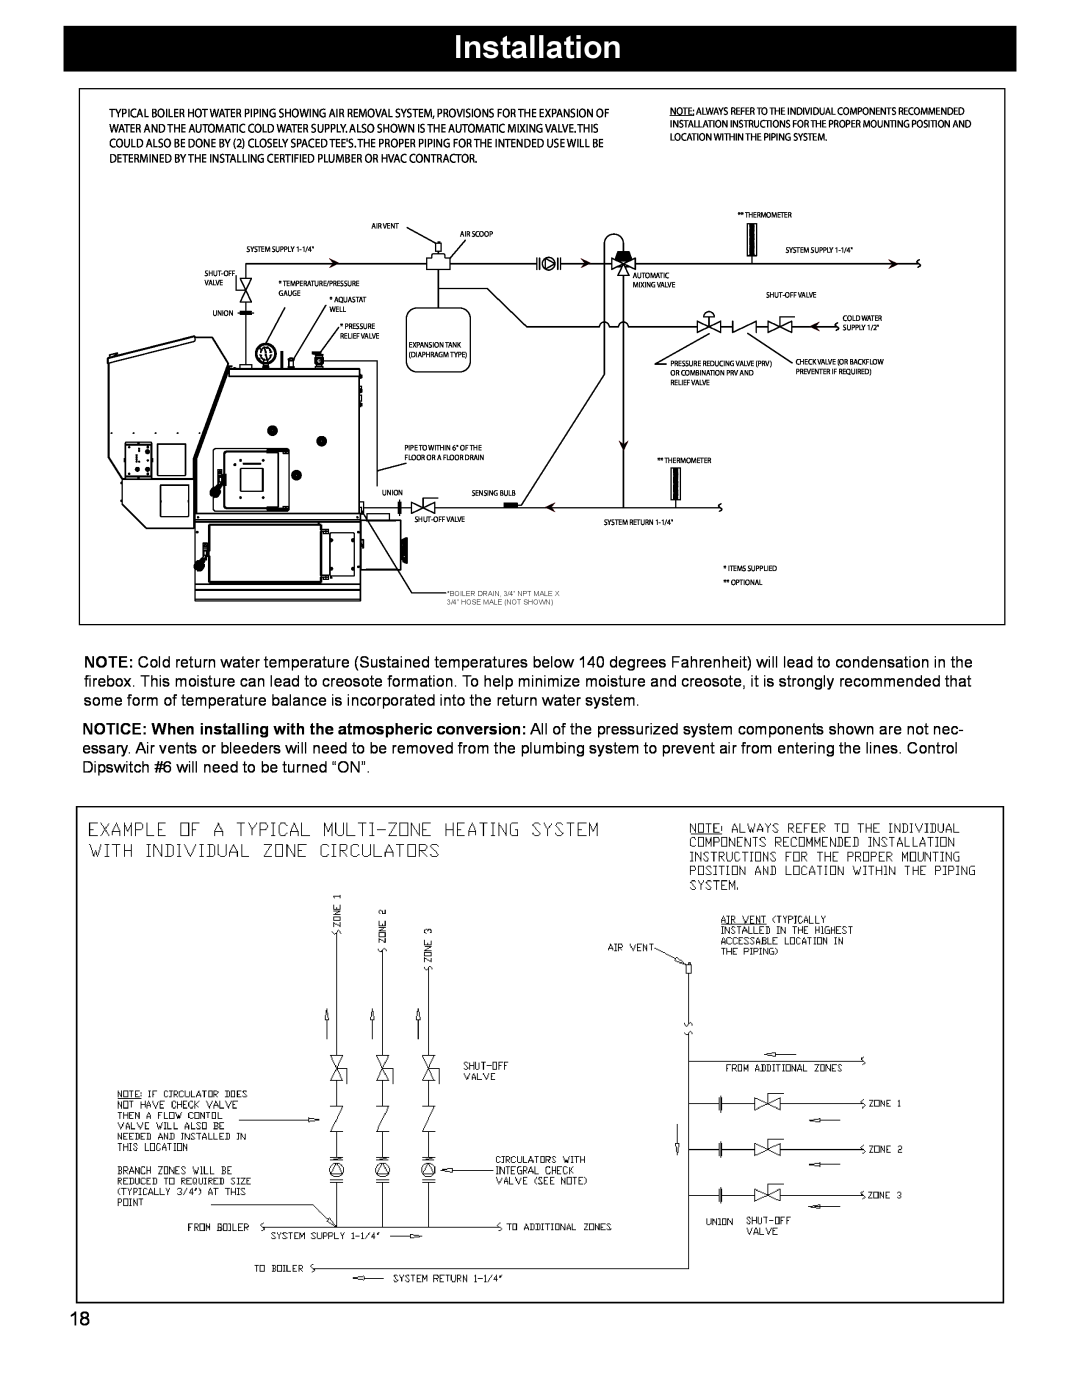 Hearth and Home Technologies BH 105 manual Installation, Sensing Bulb, Shut-Off Valve, Air Scoop, Aquastat Well 